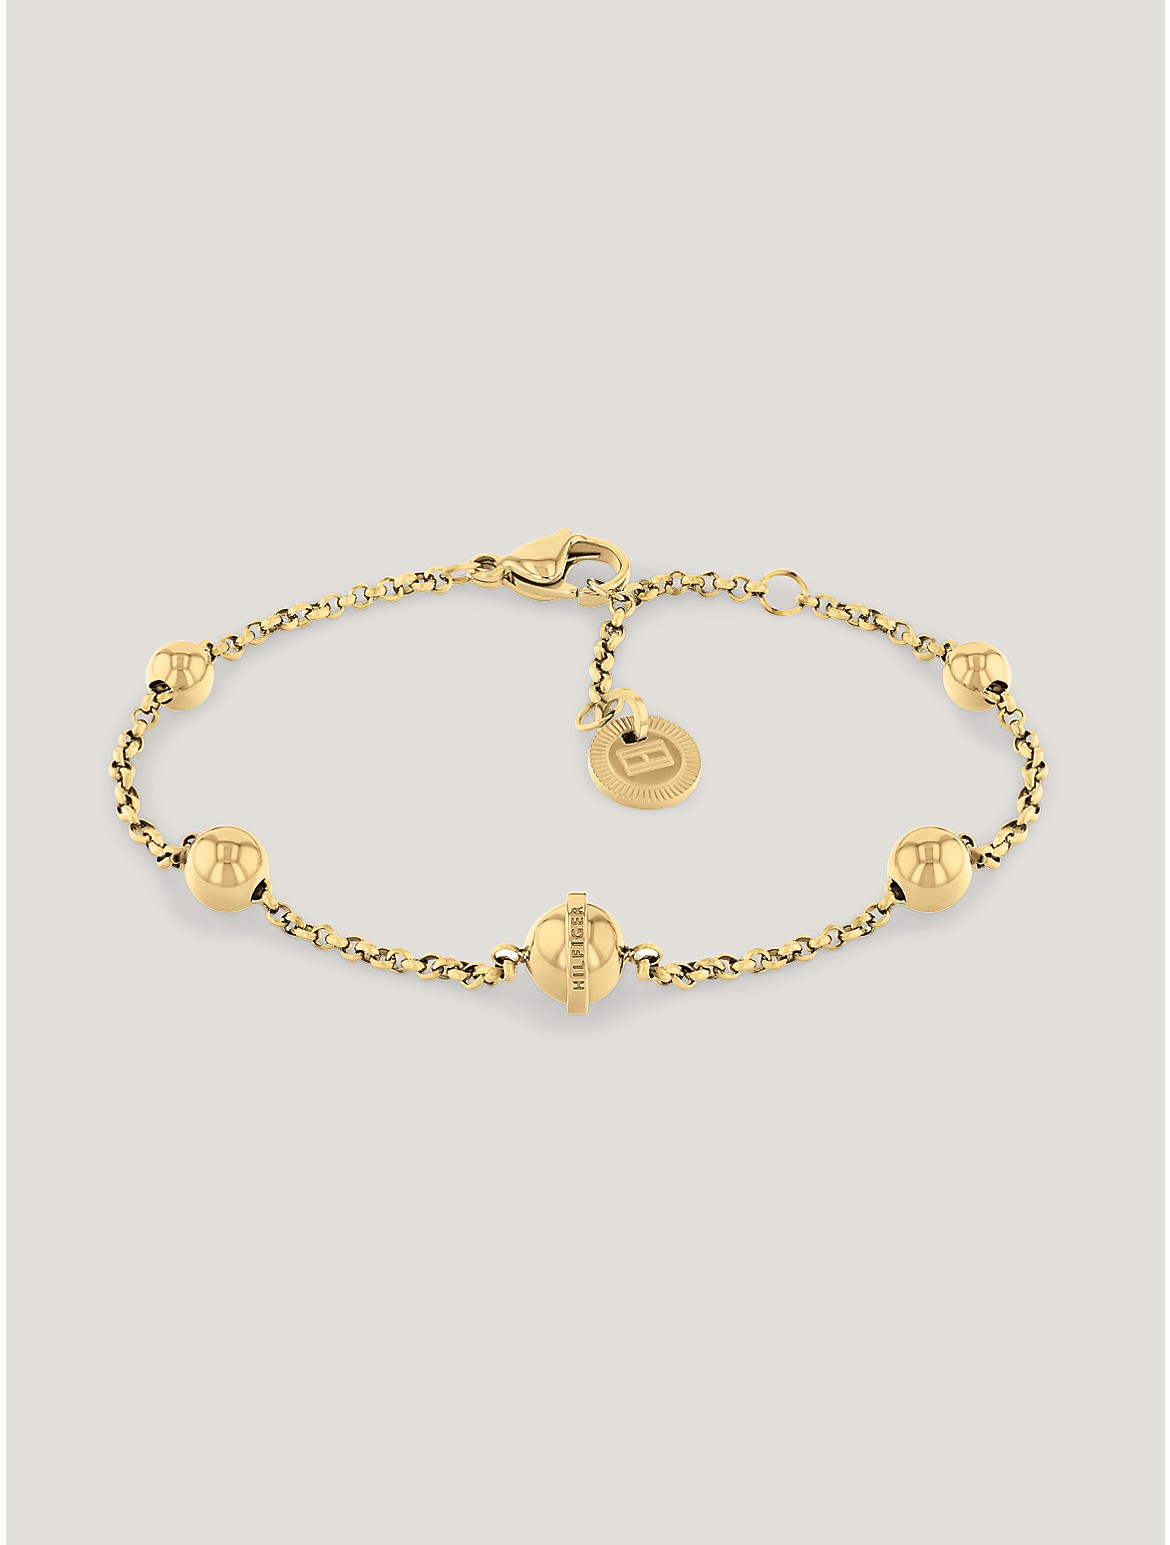 Tommy Hilfiger Women's Gold-Tone Orb Charm Bracelet